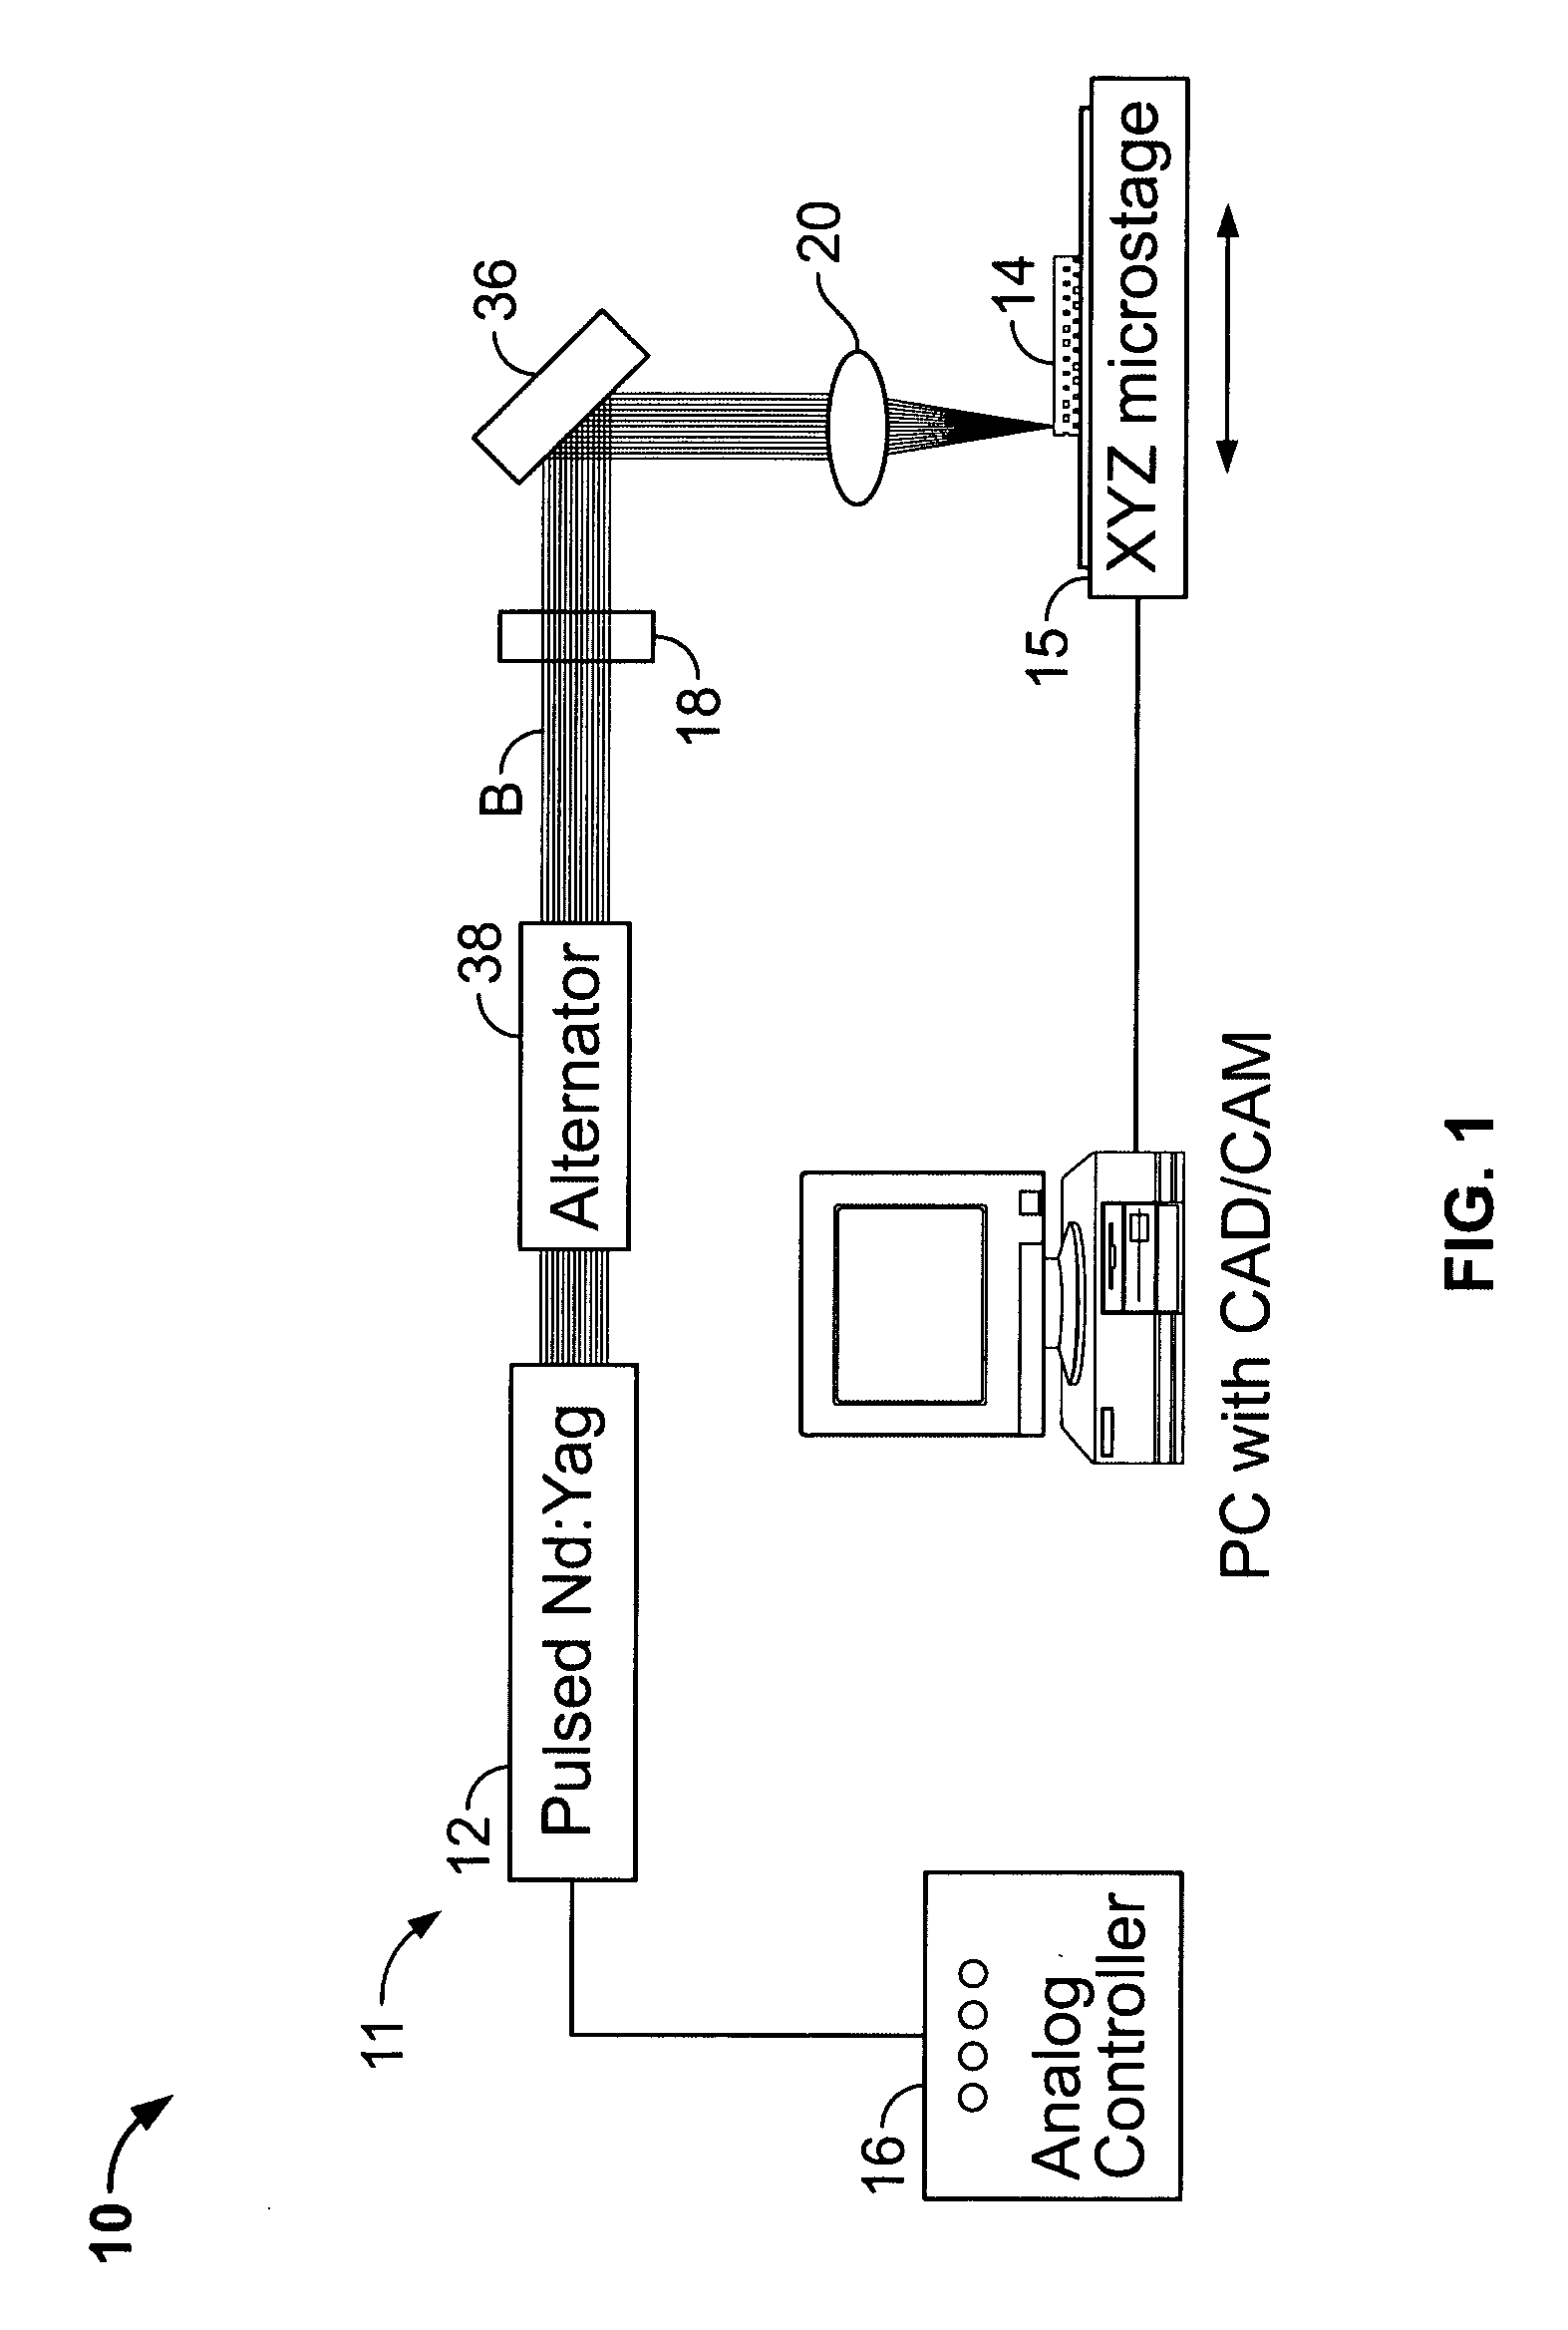 UV pulsed laser machining apparatus and method